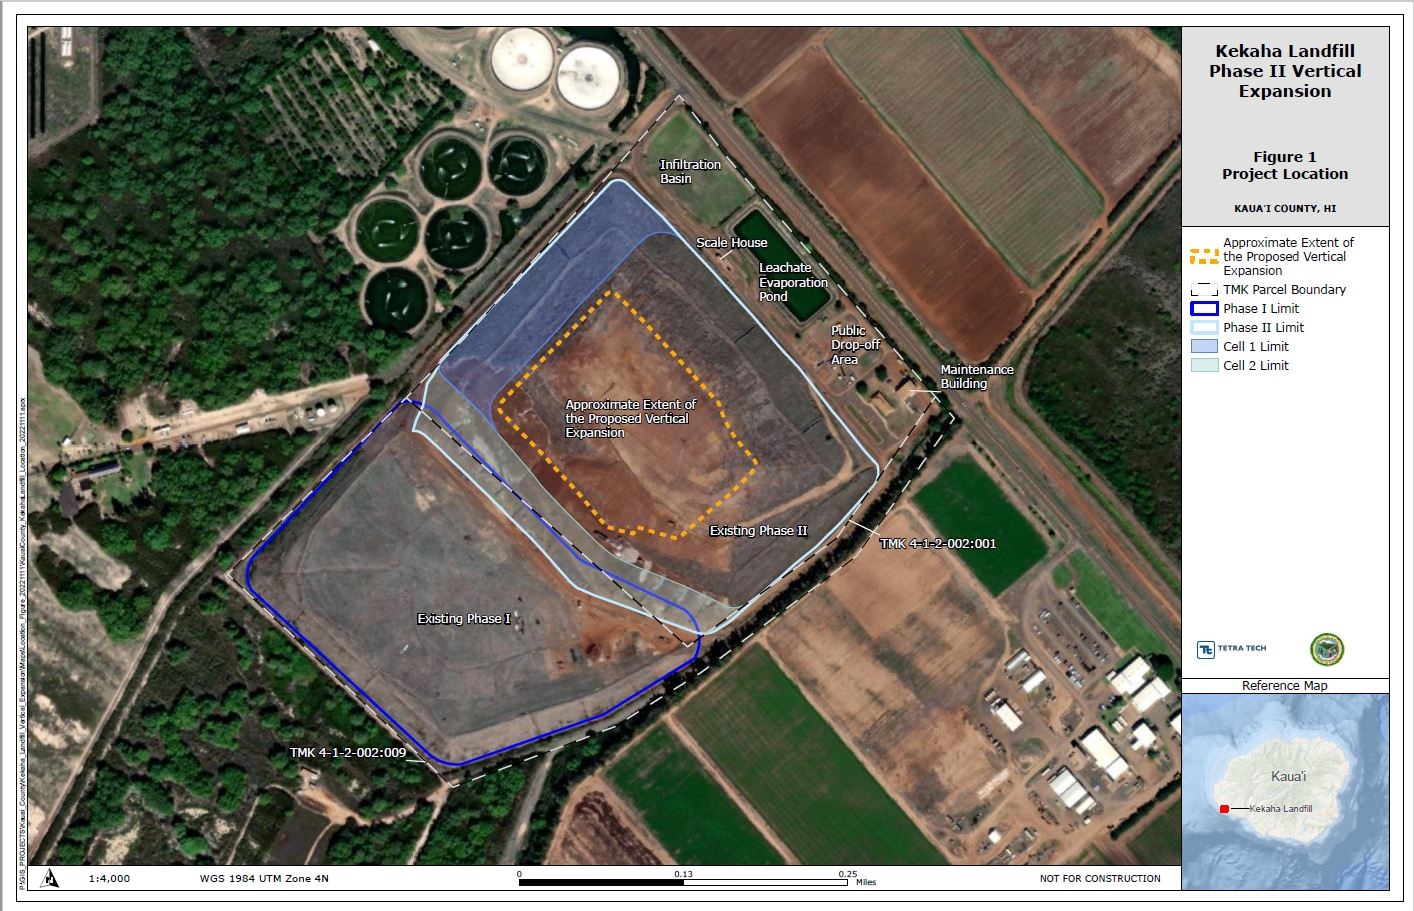 Tentative location map for Kekaha landfill vertical expansion